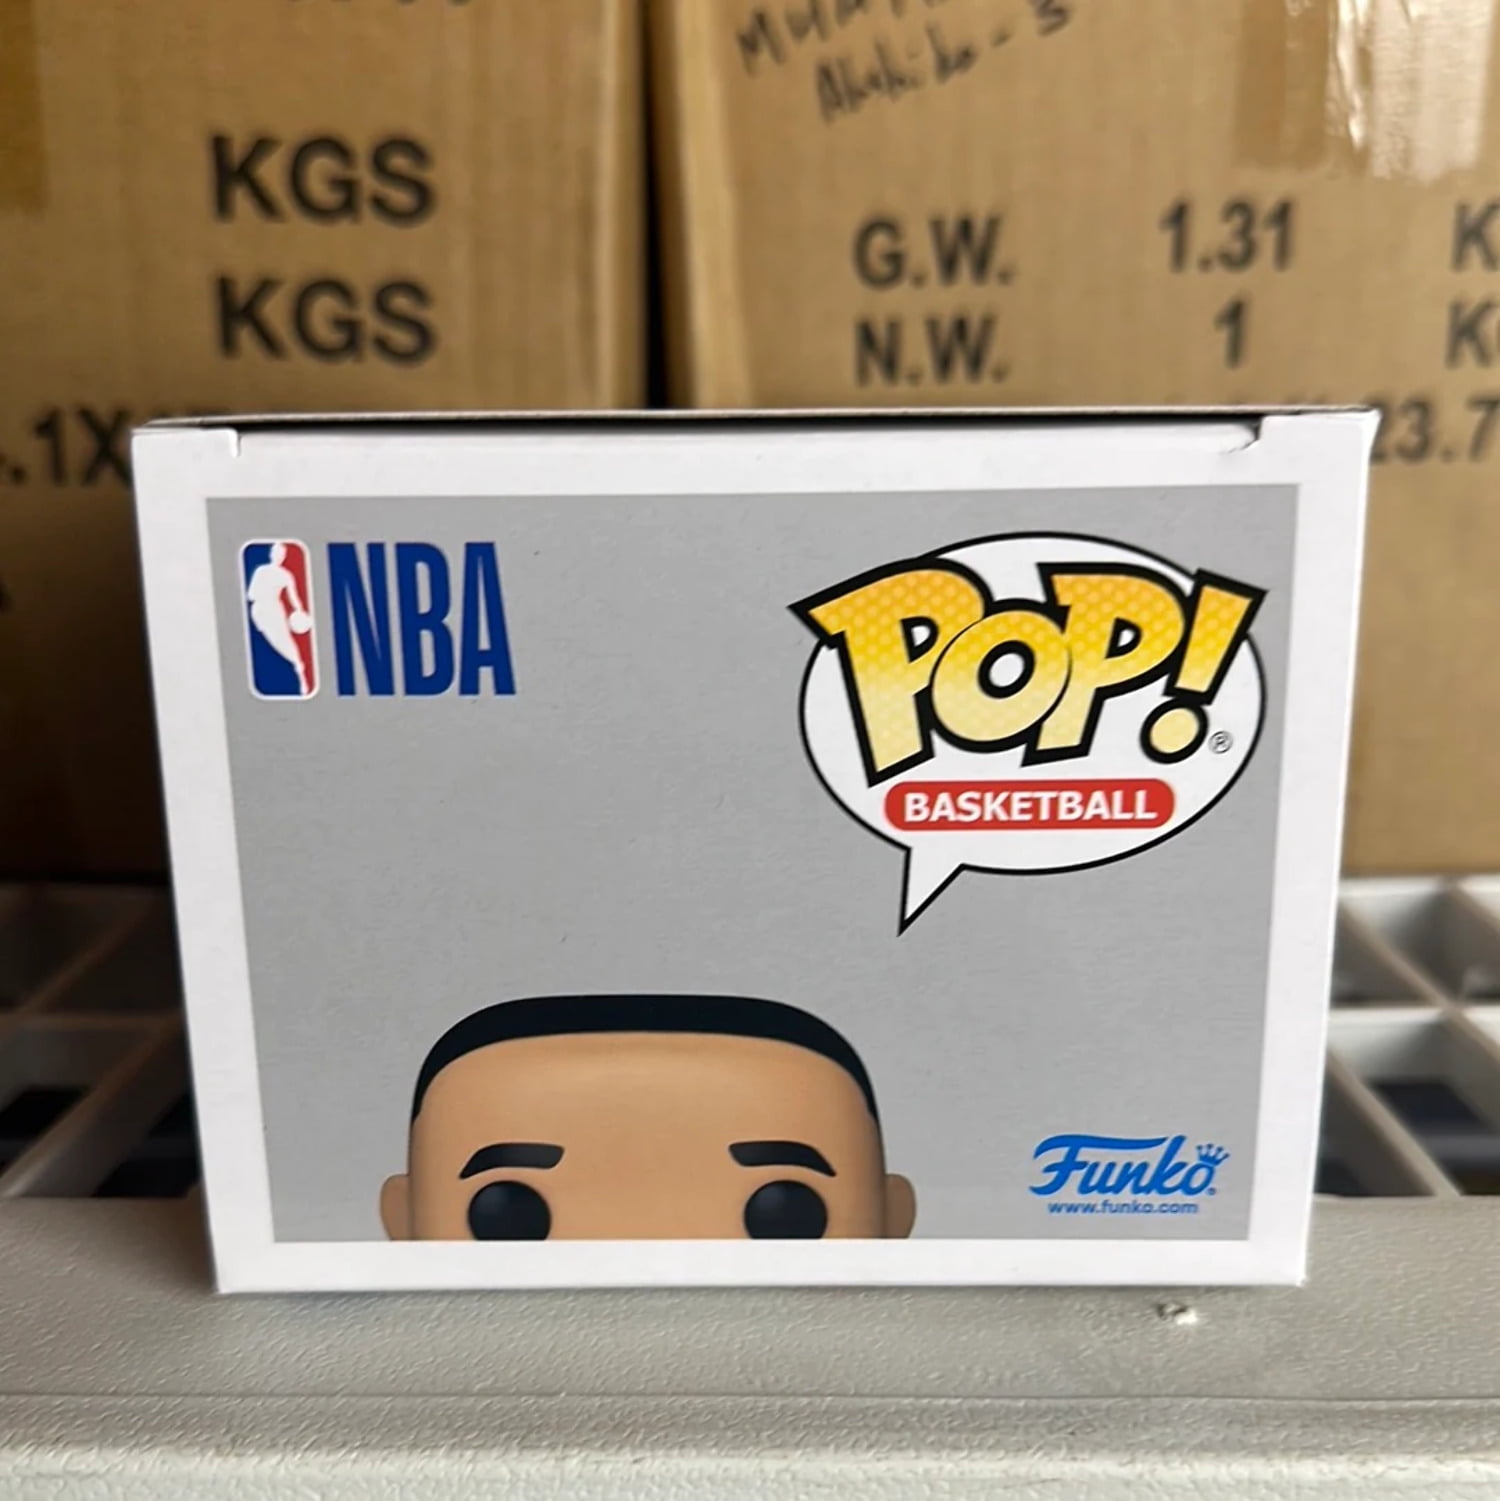 Funko Pop! NBA Basketball - Jordan Poole Washington Wizards #170